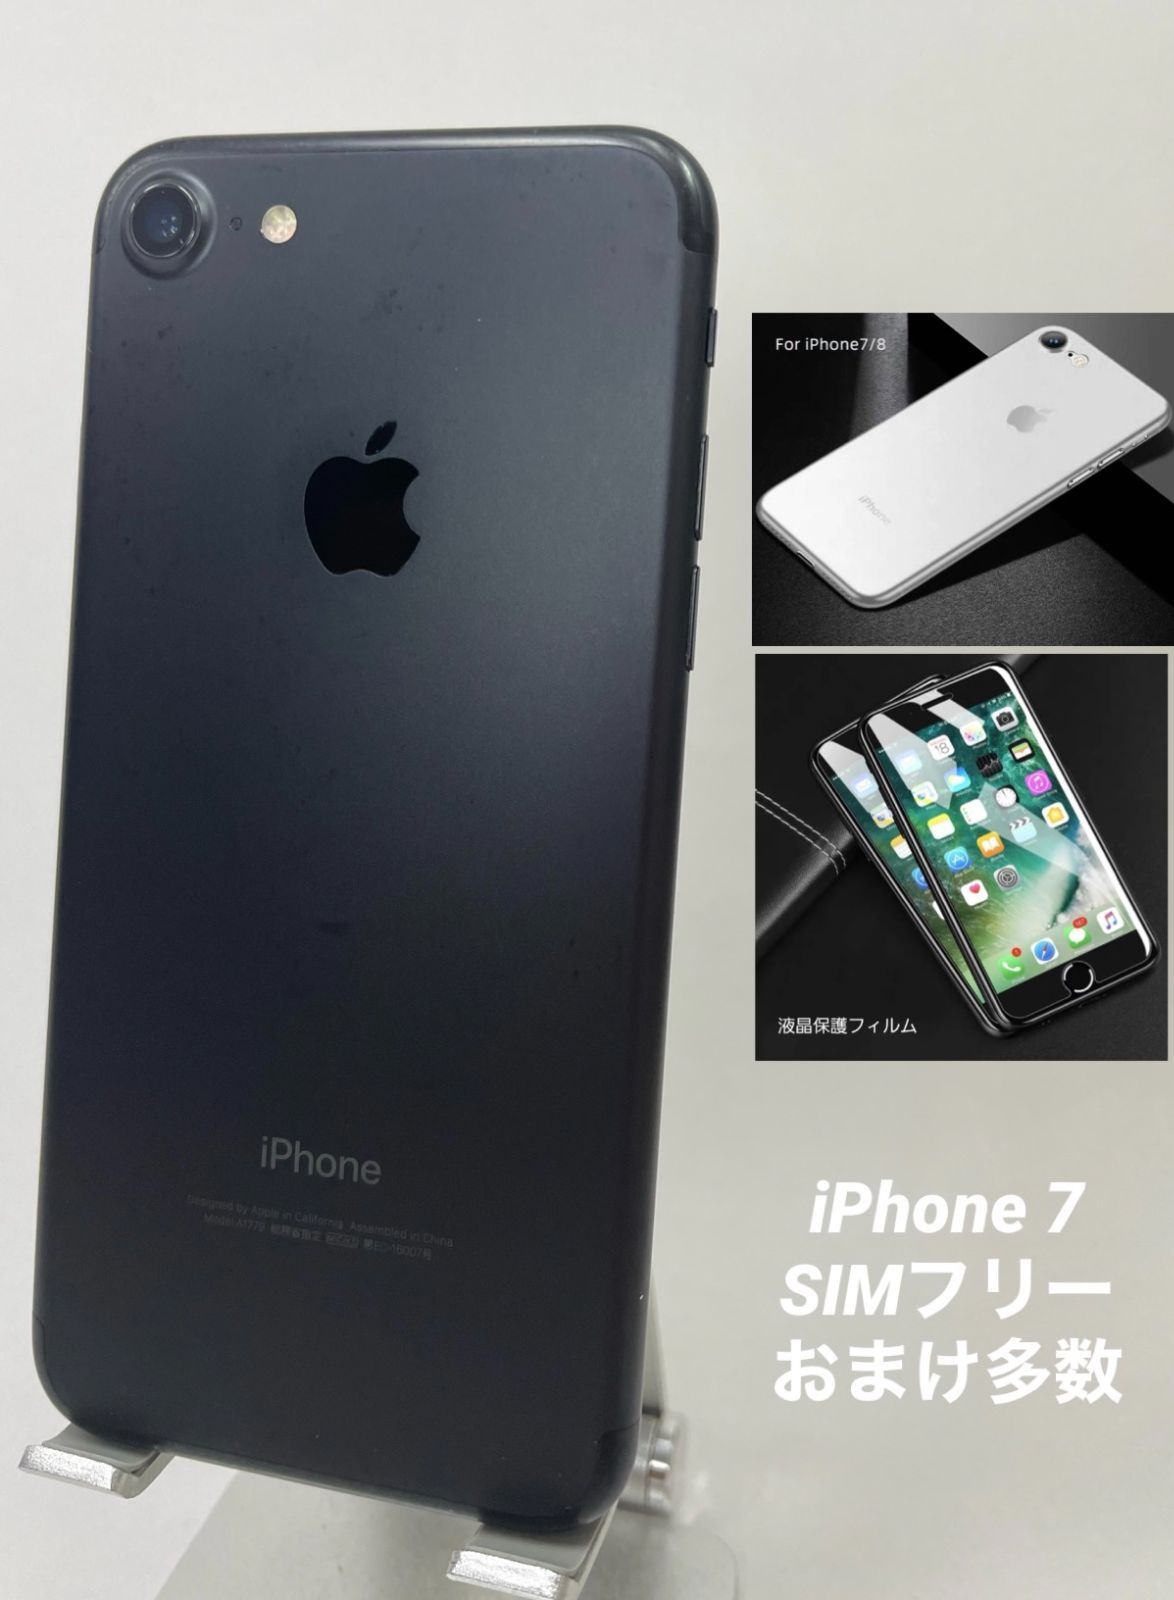 iPhone 7 Black 32GB SIMフリースマートフォン本体 - olekoservis.com